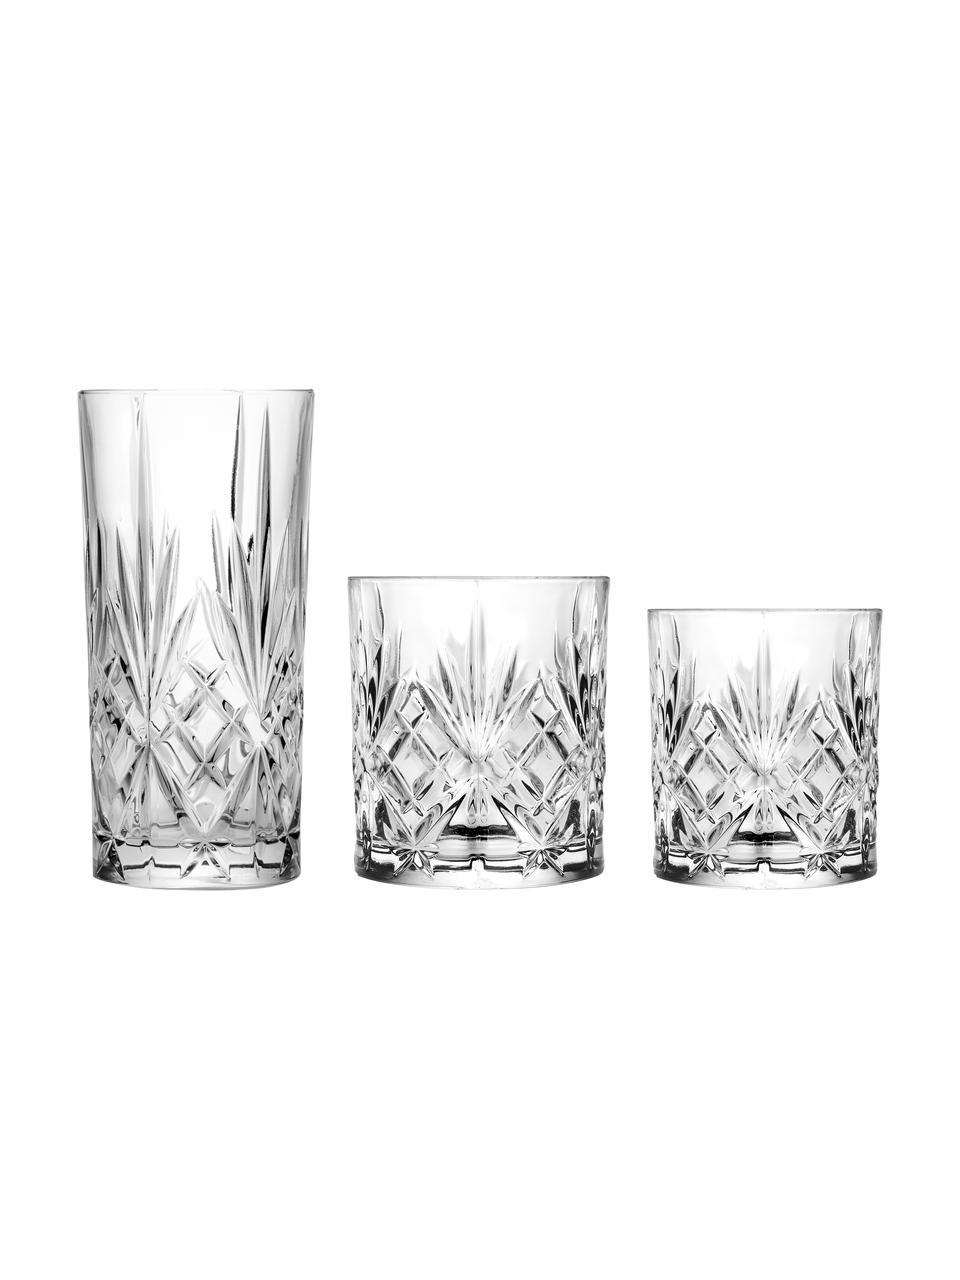 Set de vasos de cristal con relive Melodia, 6 comensales (18 pzas.), Cristal, Transparente, Set de diferentes tamaños